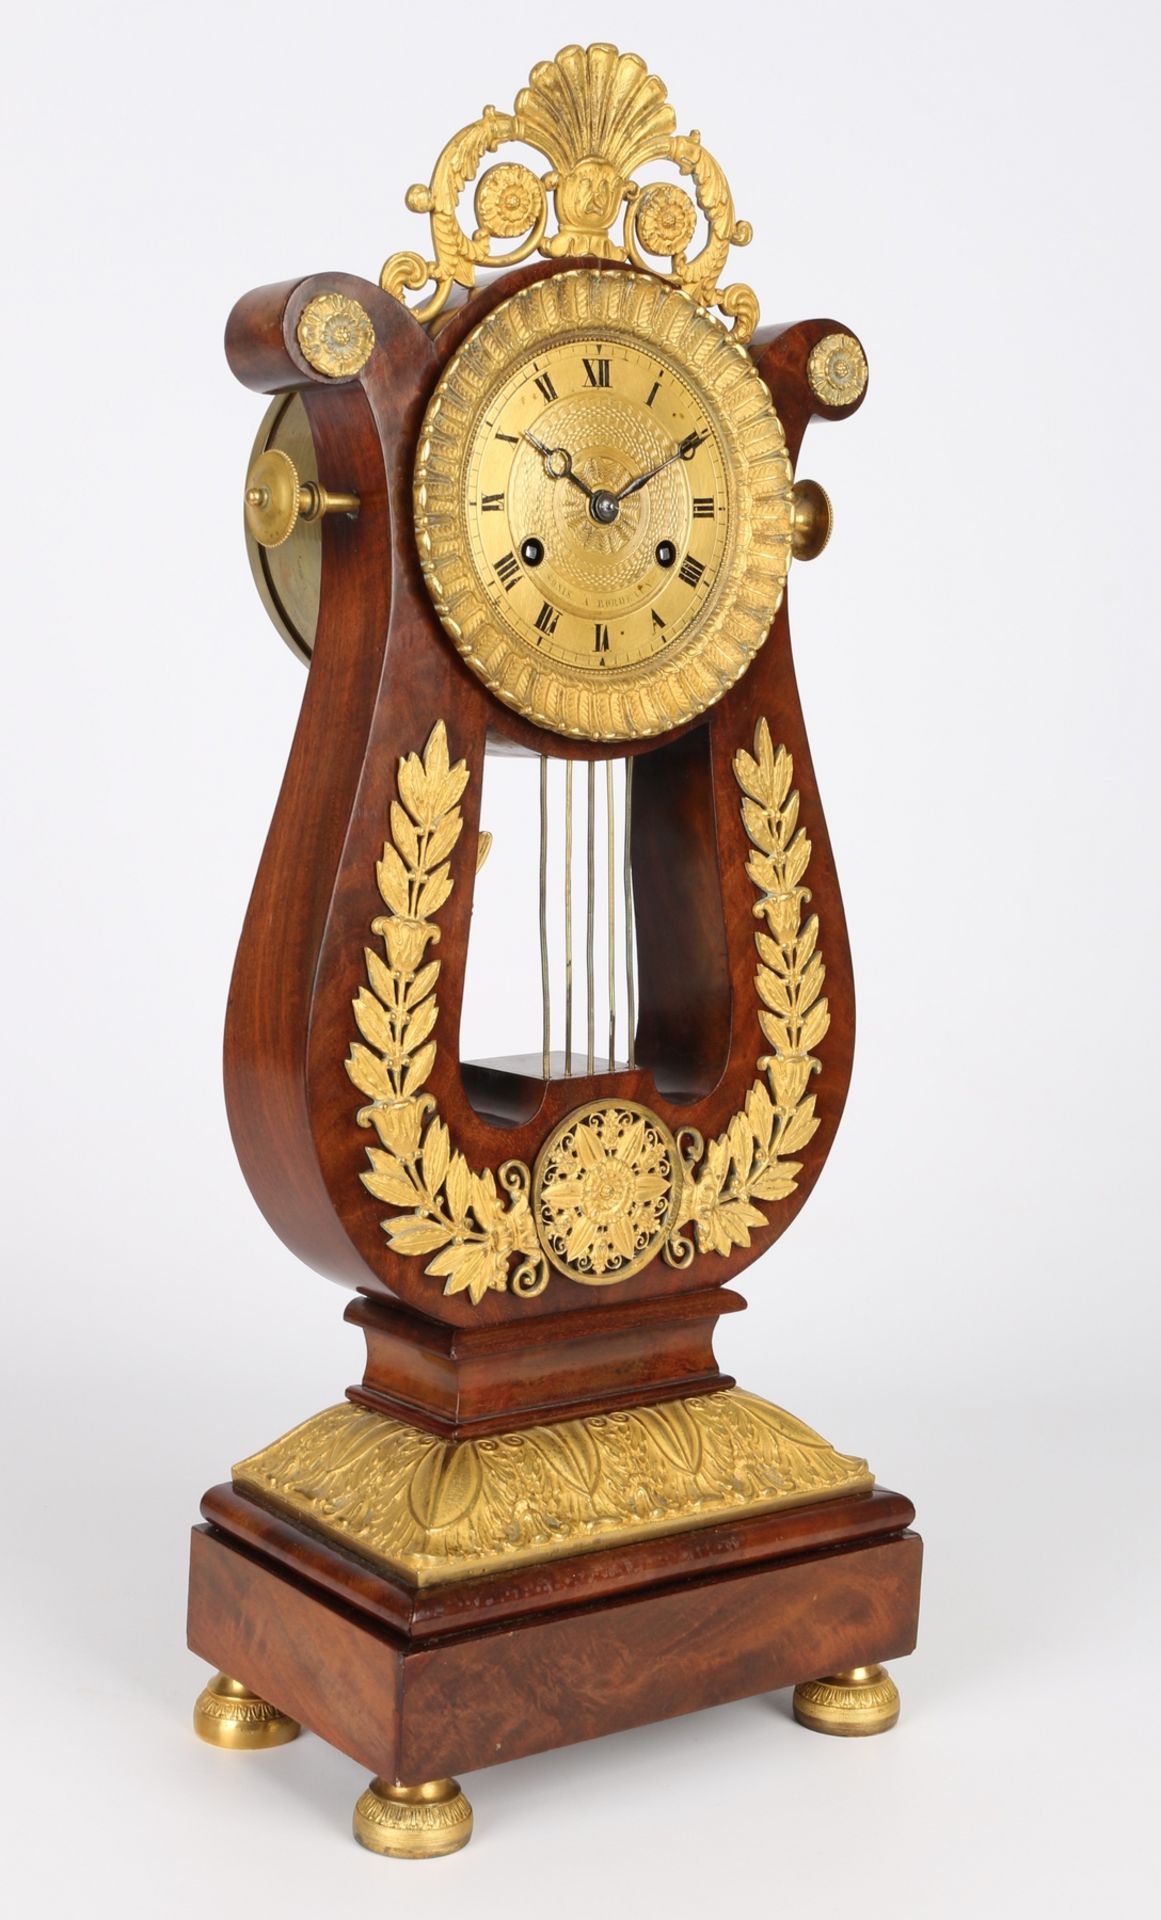 Lyra-Pendule / Kaminuhr, Frankreich um 1820, french lyra mantel clock ca.1820, - Image 2 of 4